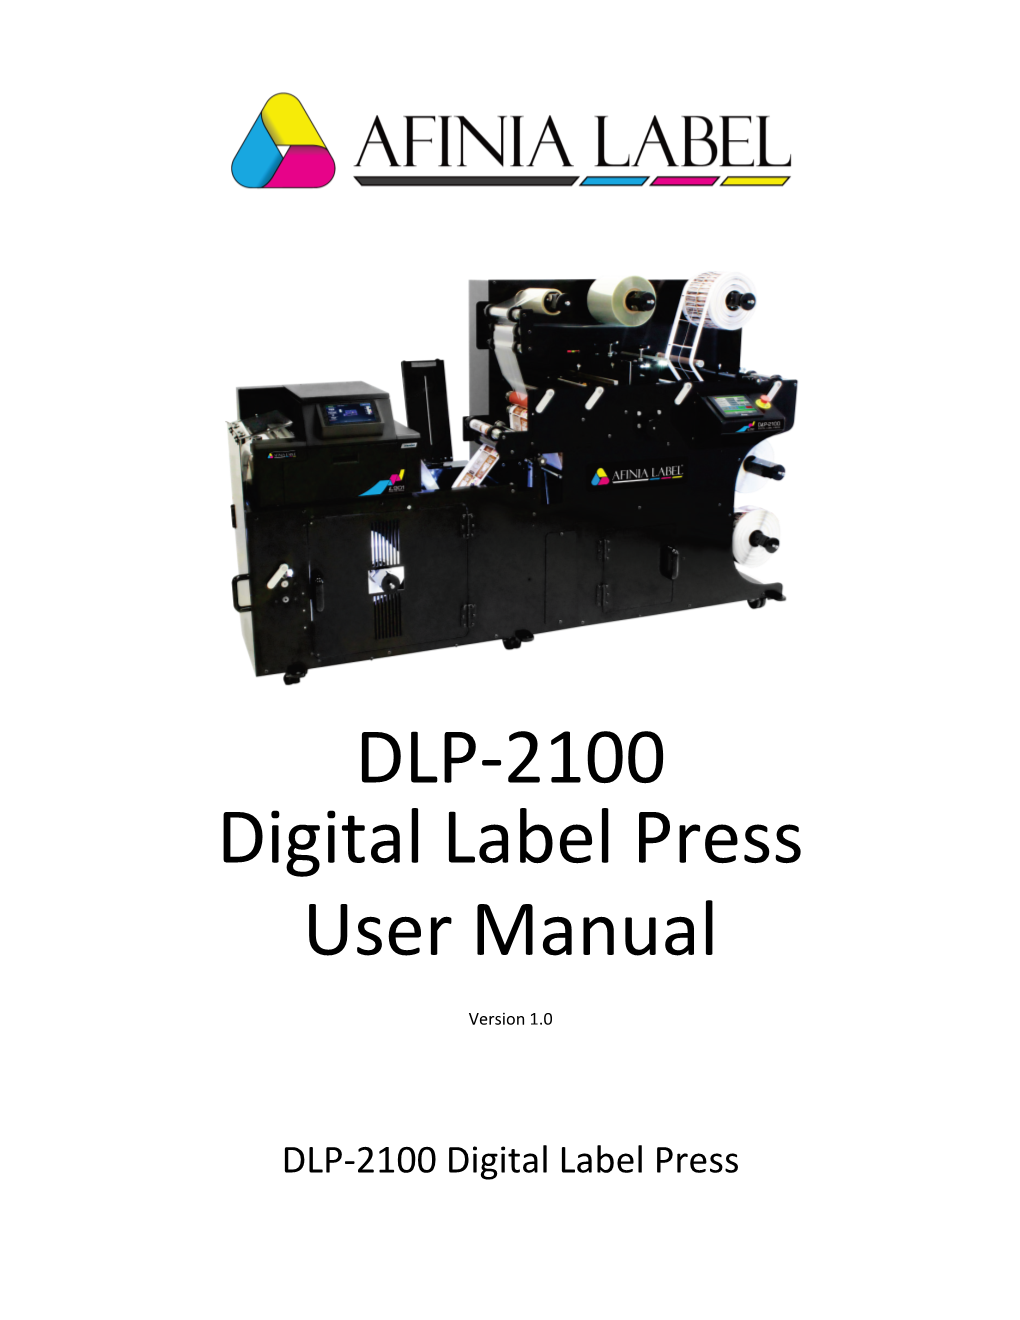 DLP-2100 Digital Label Press User Manual